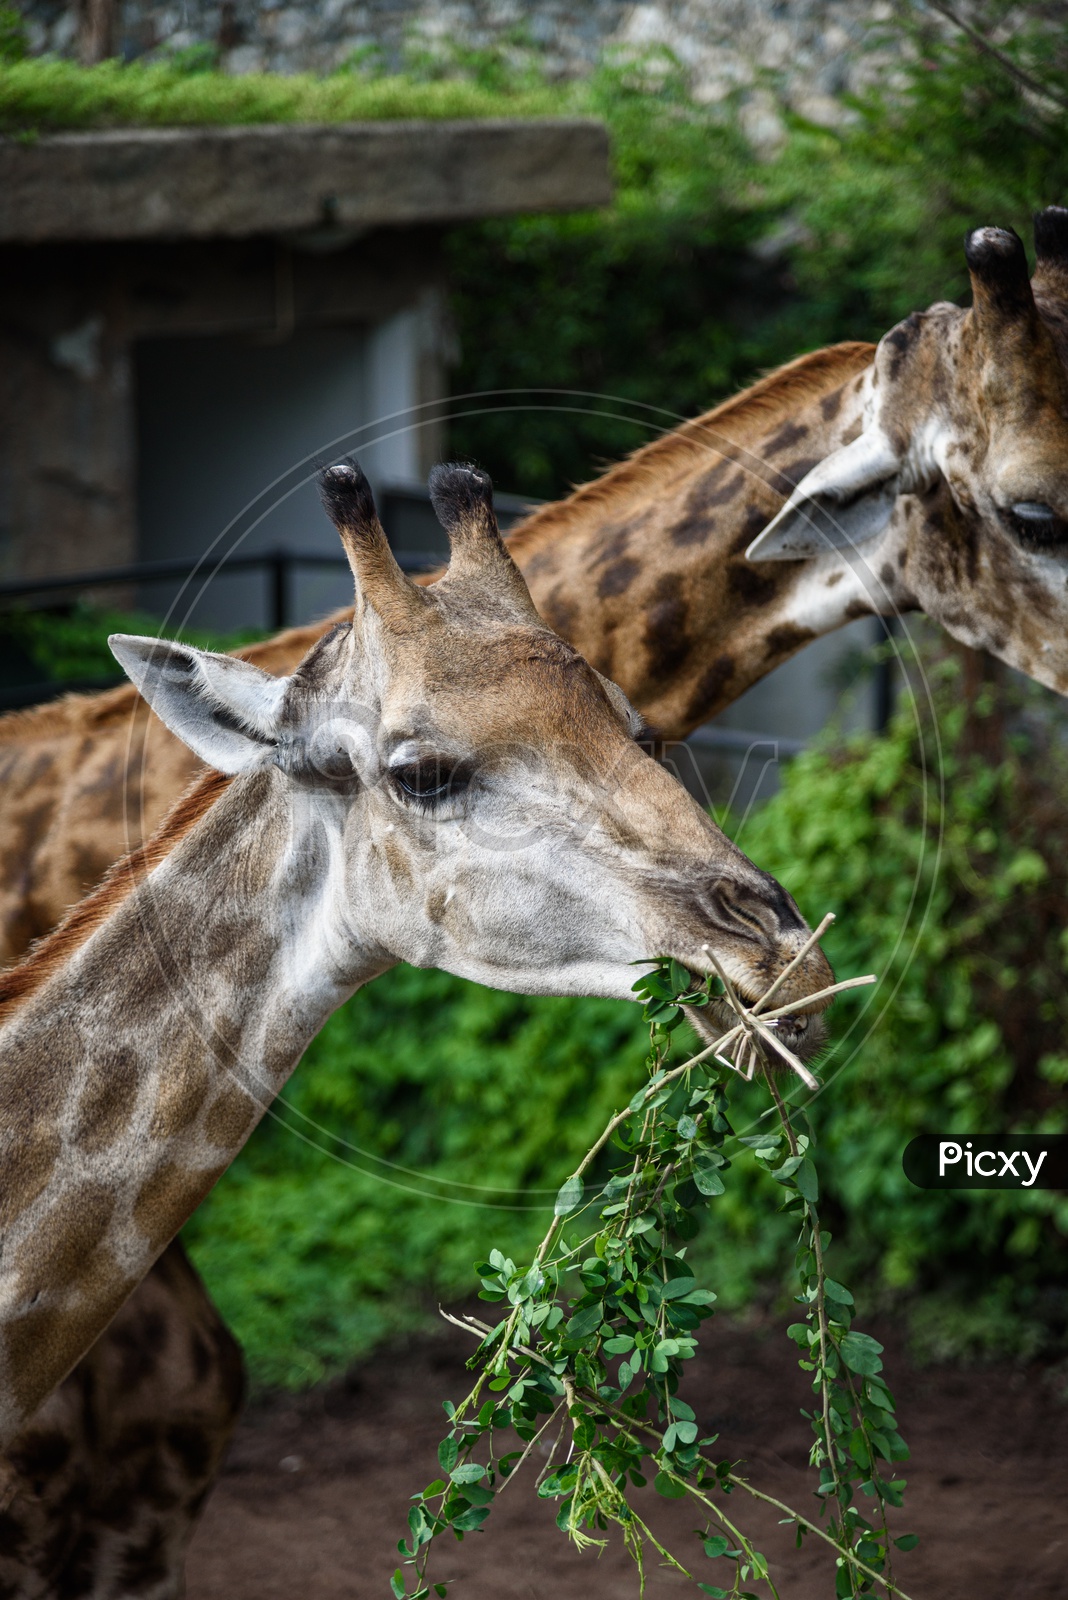 Giraffes eating food that humans feed